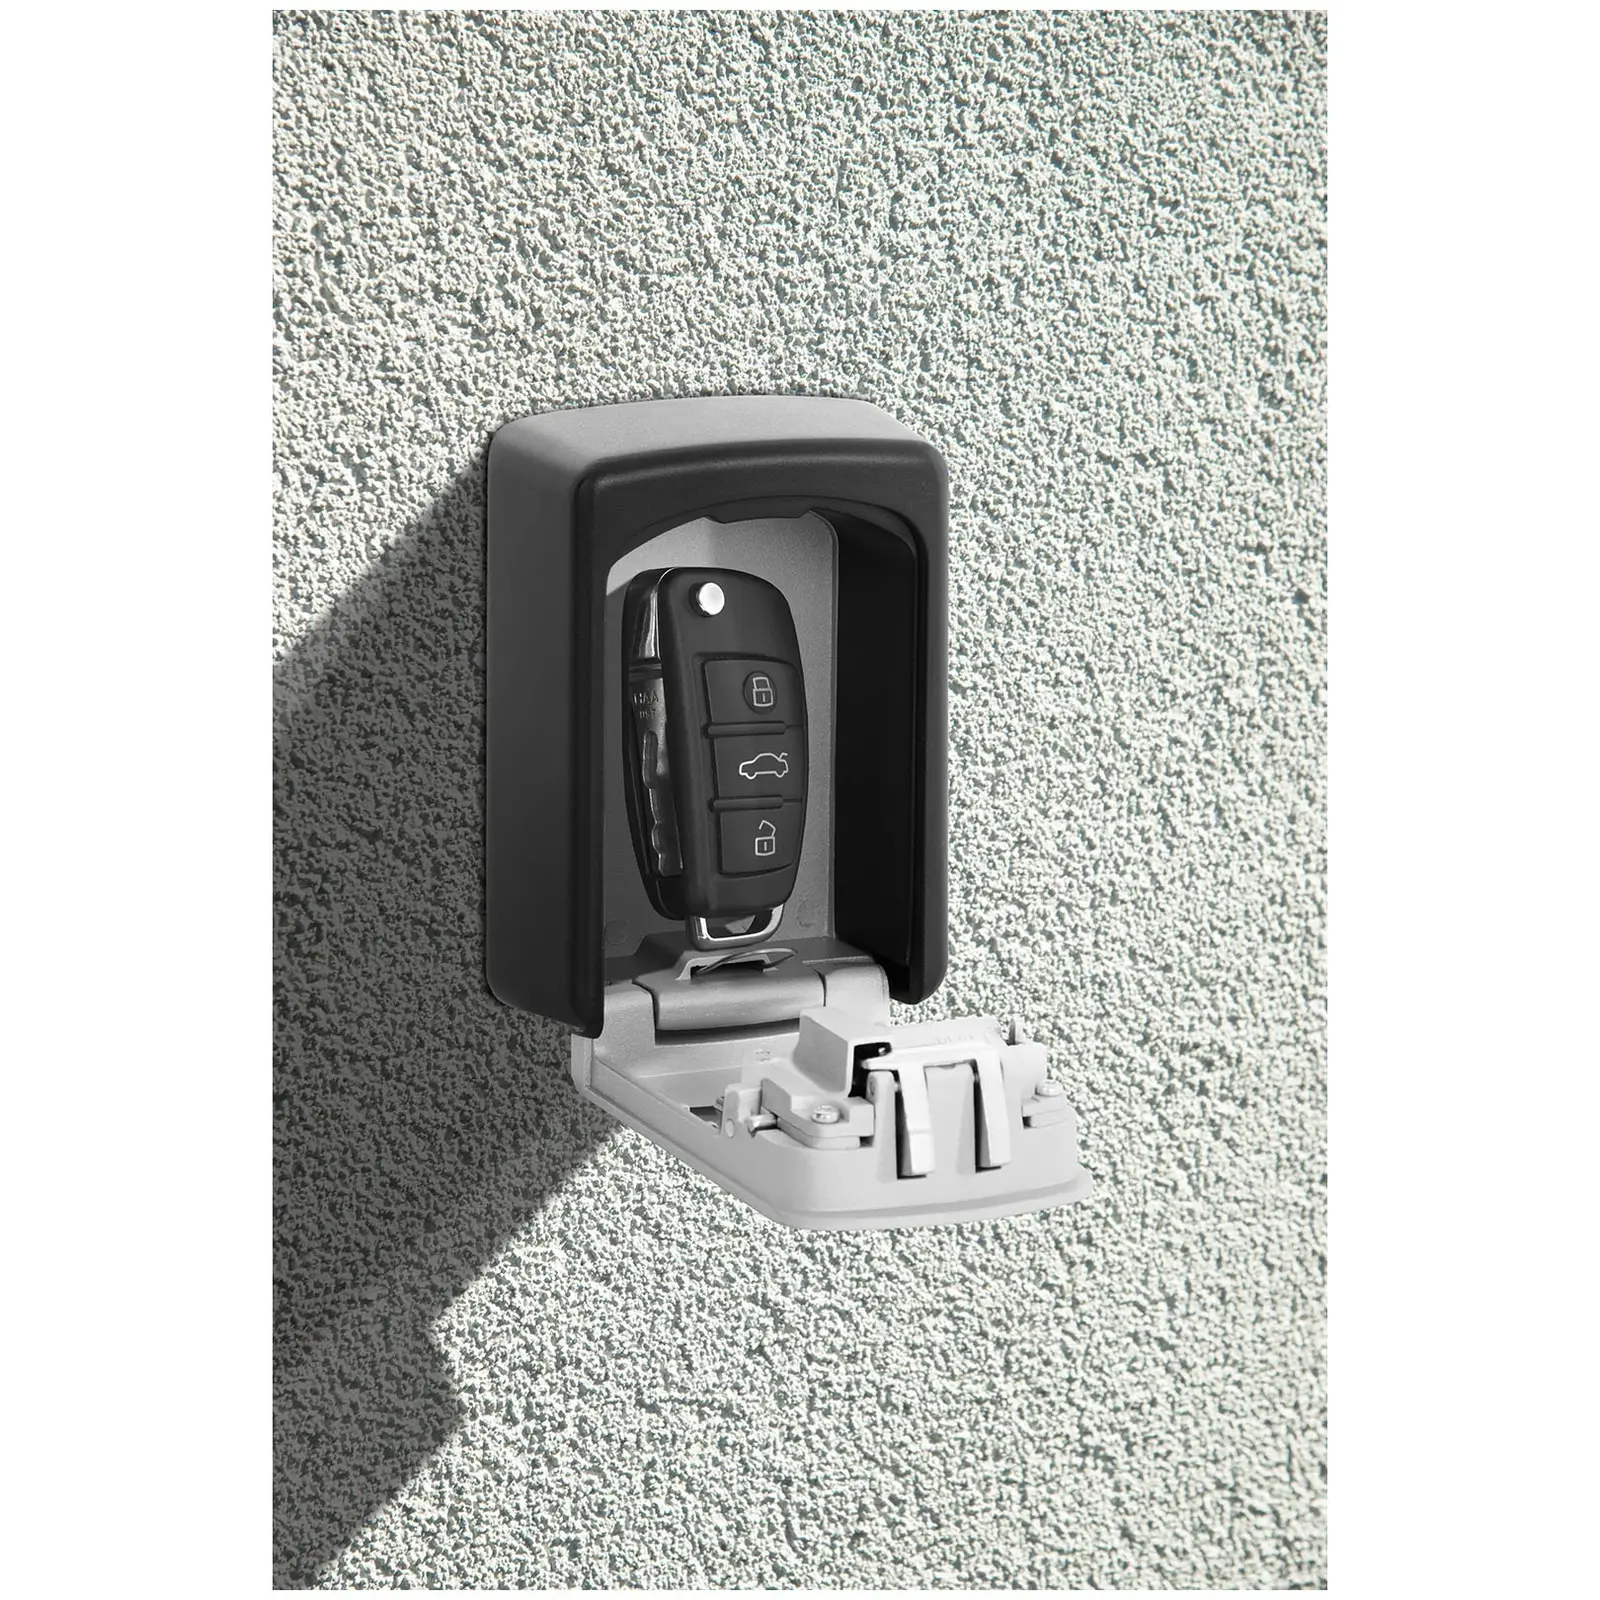 Key Box - combination lock - wall-mounted - cover